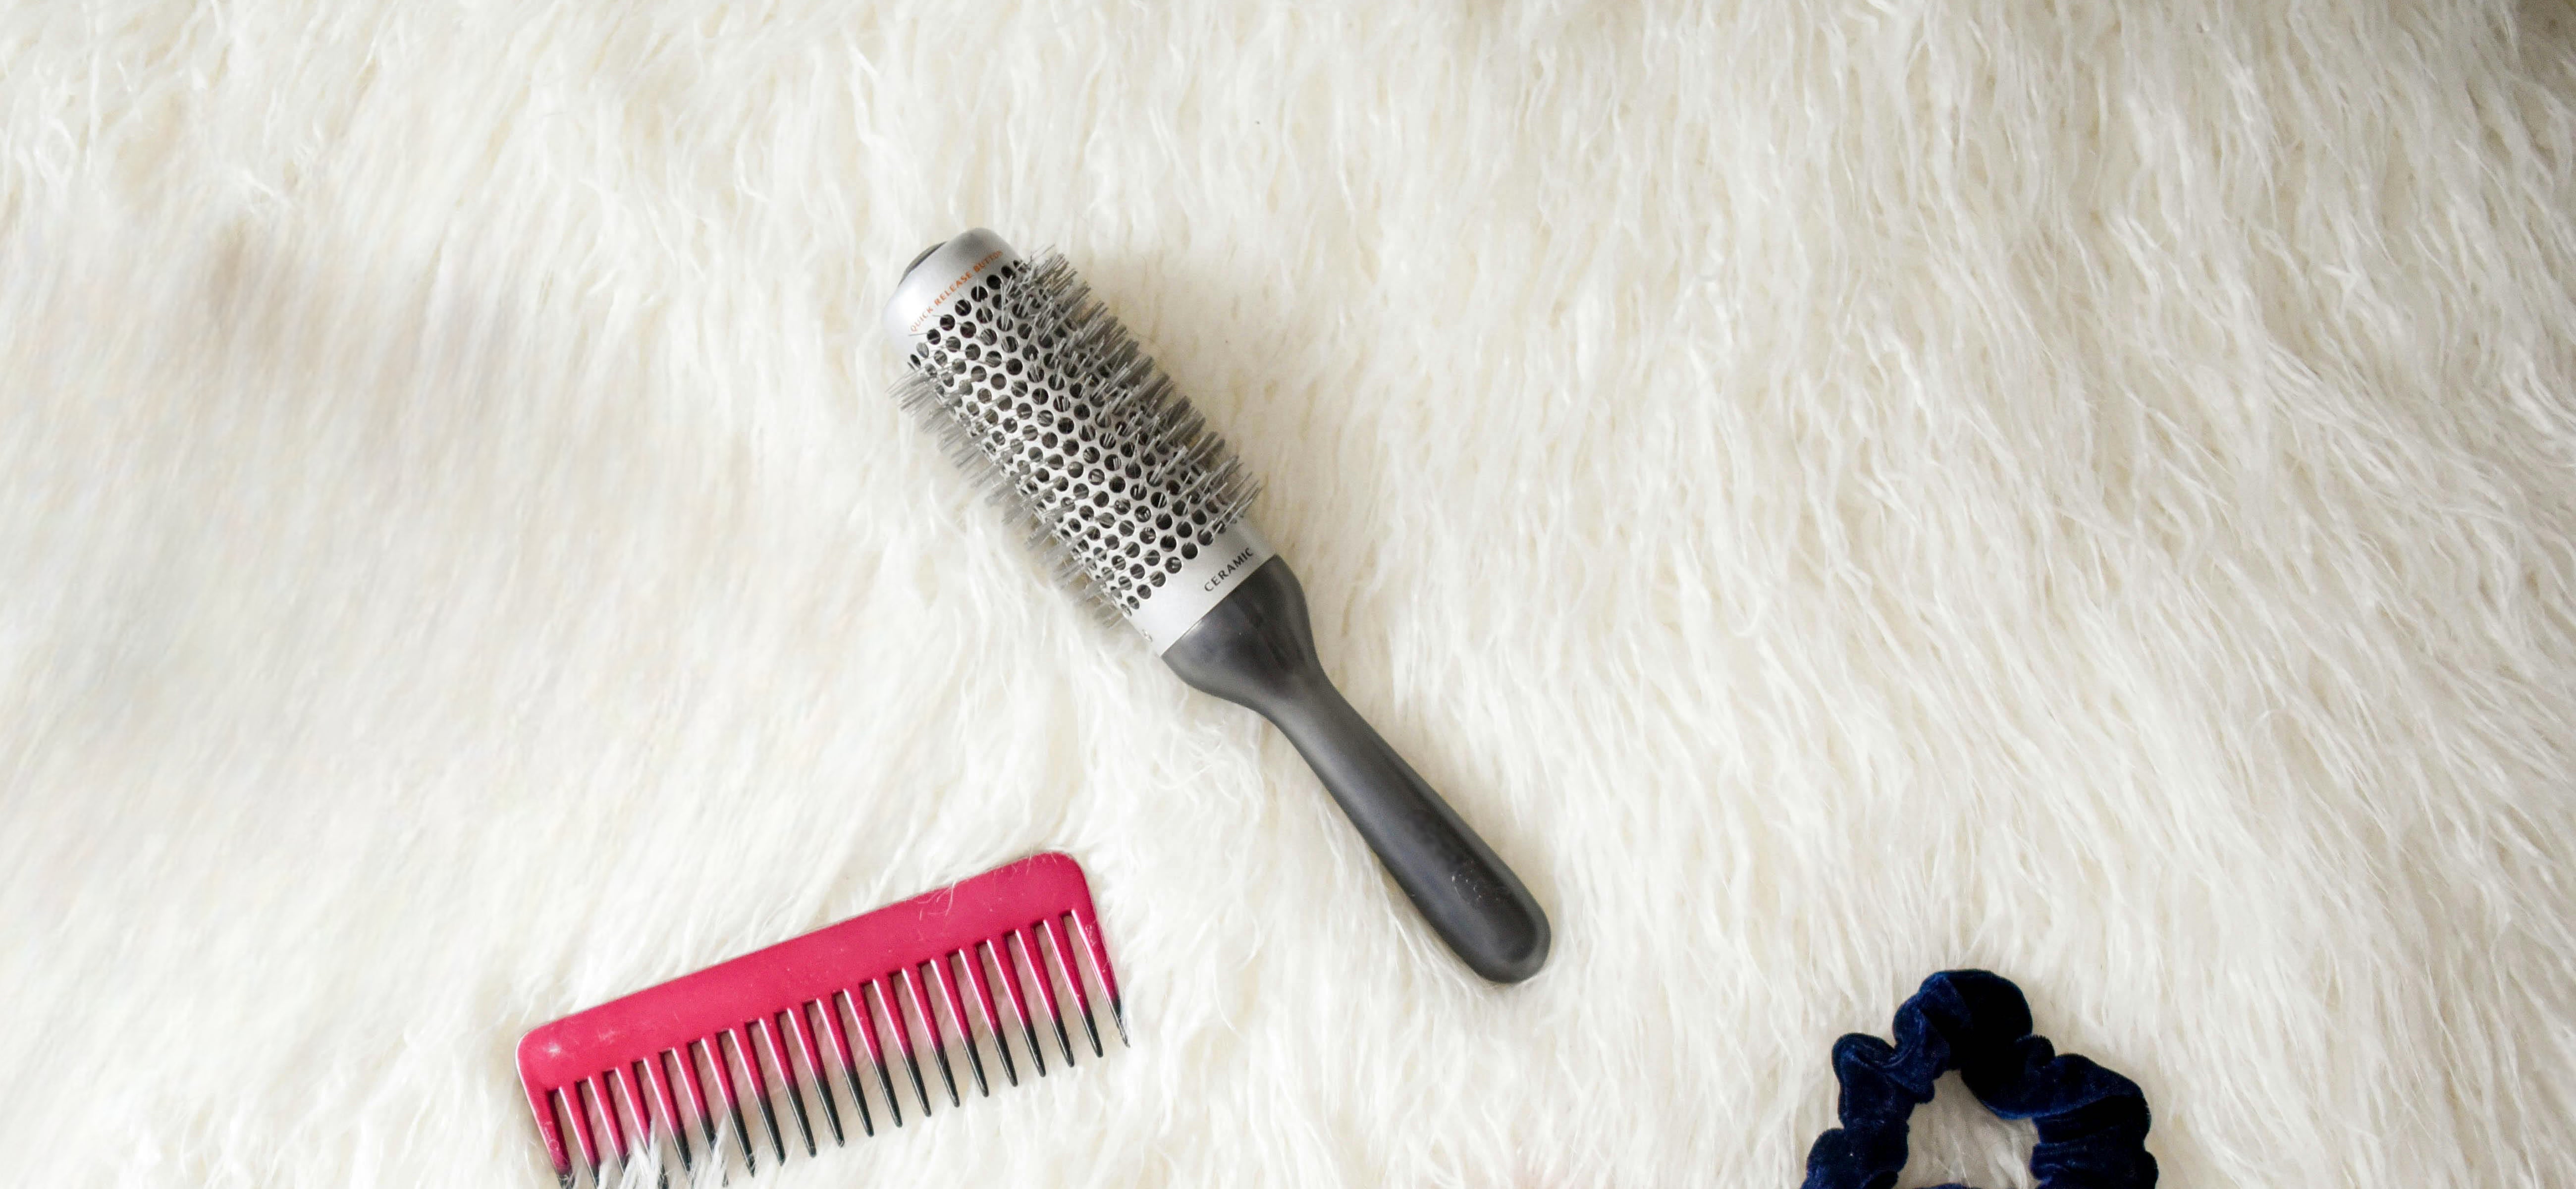 High-quality hair dryer brush for everyone